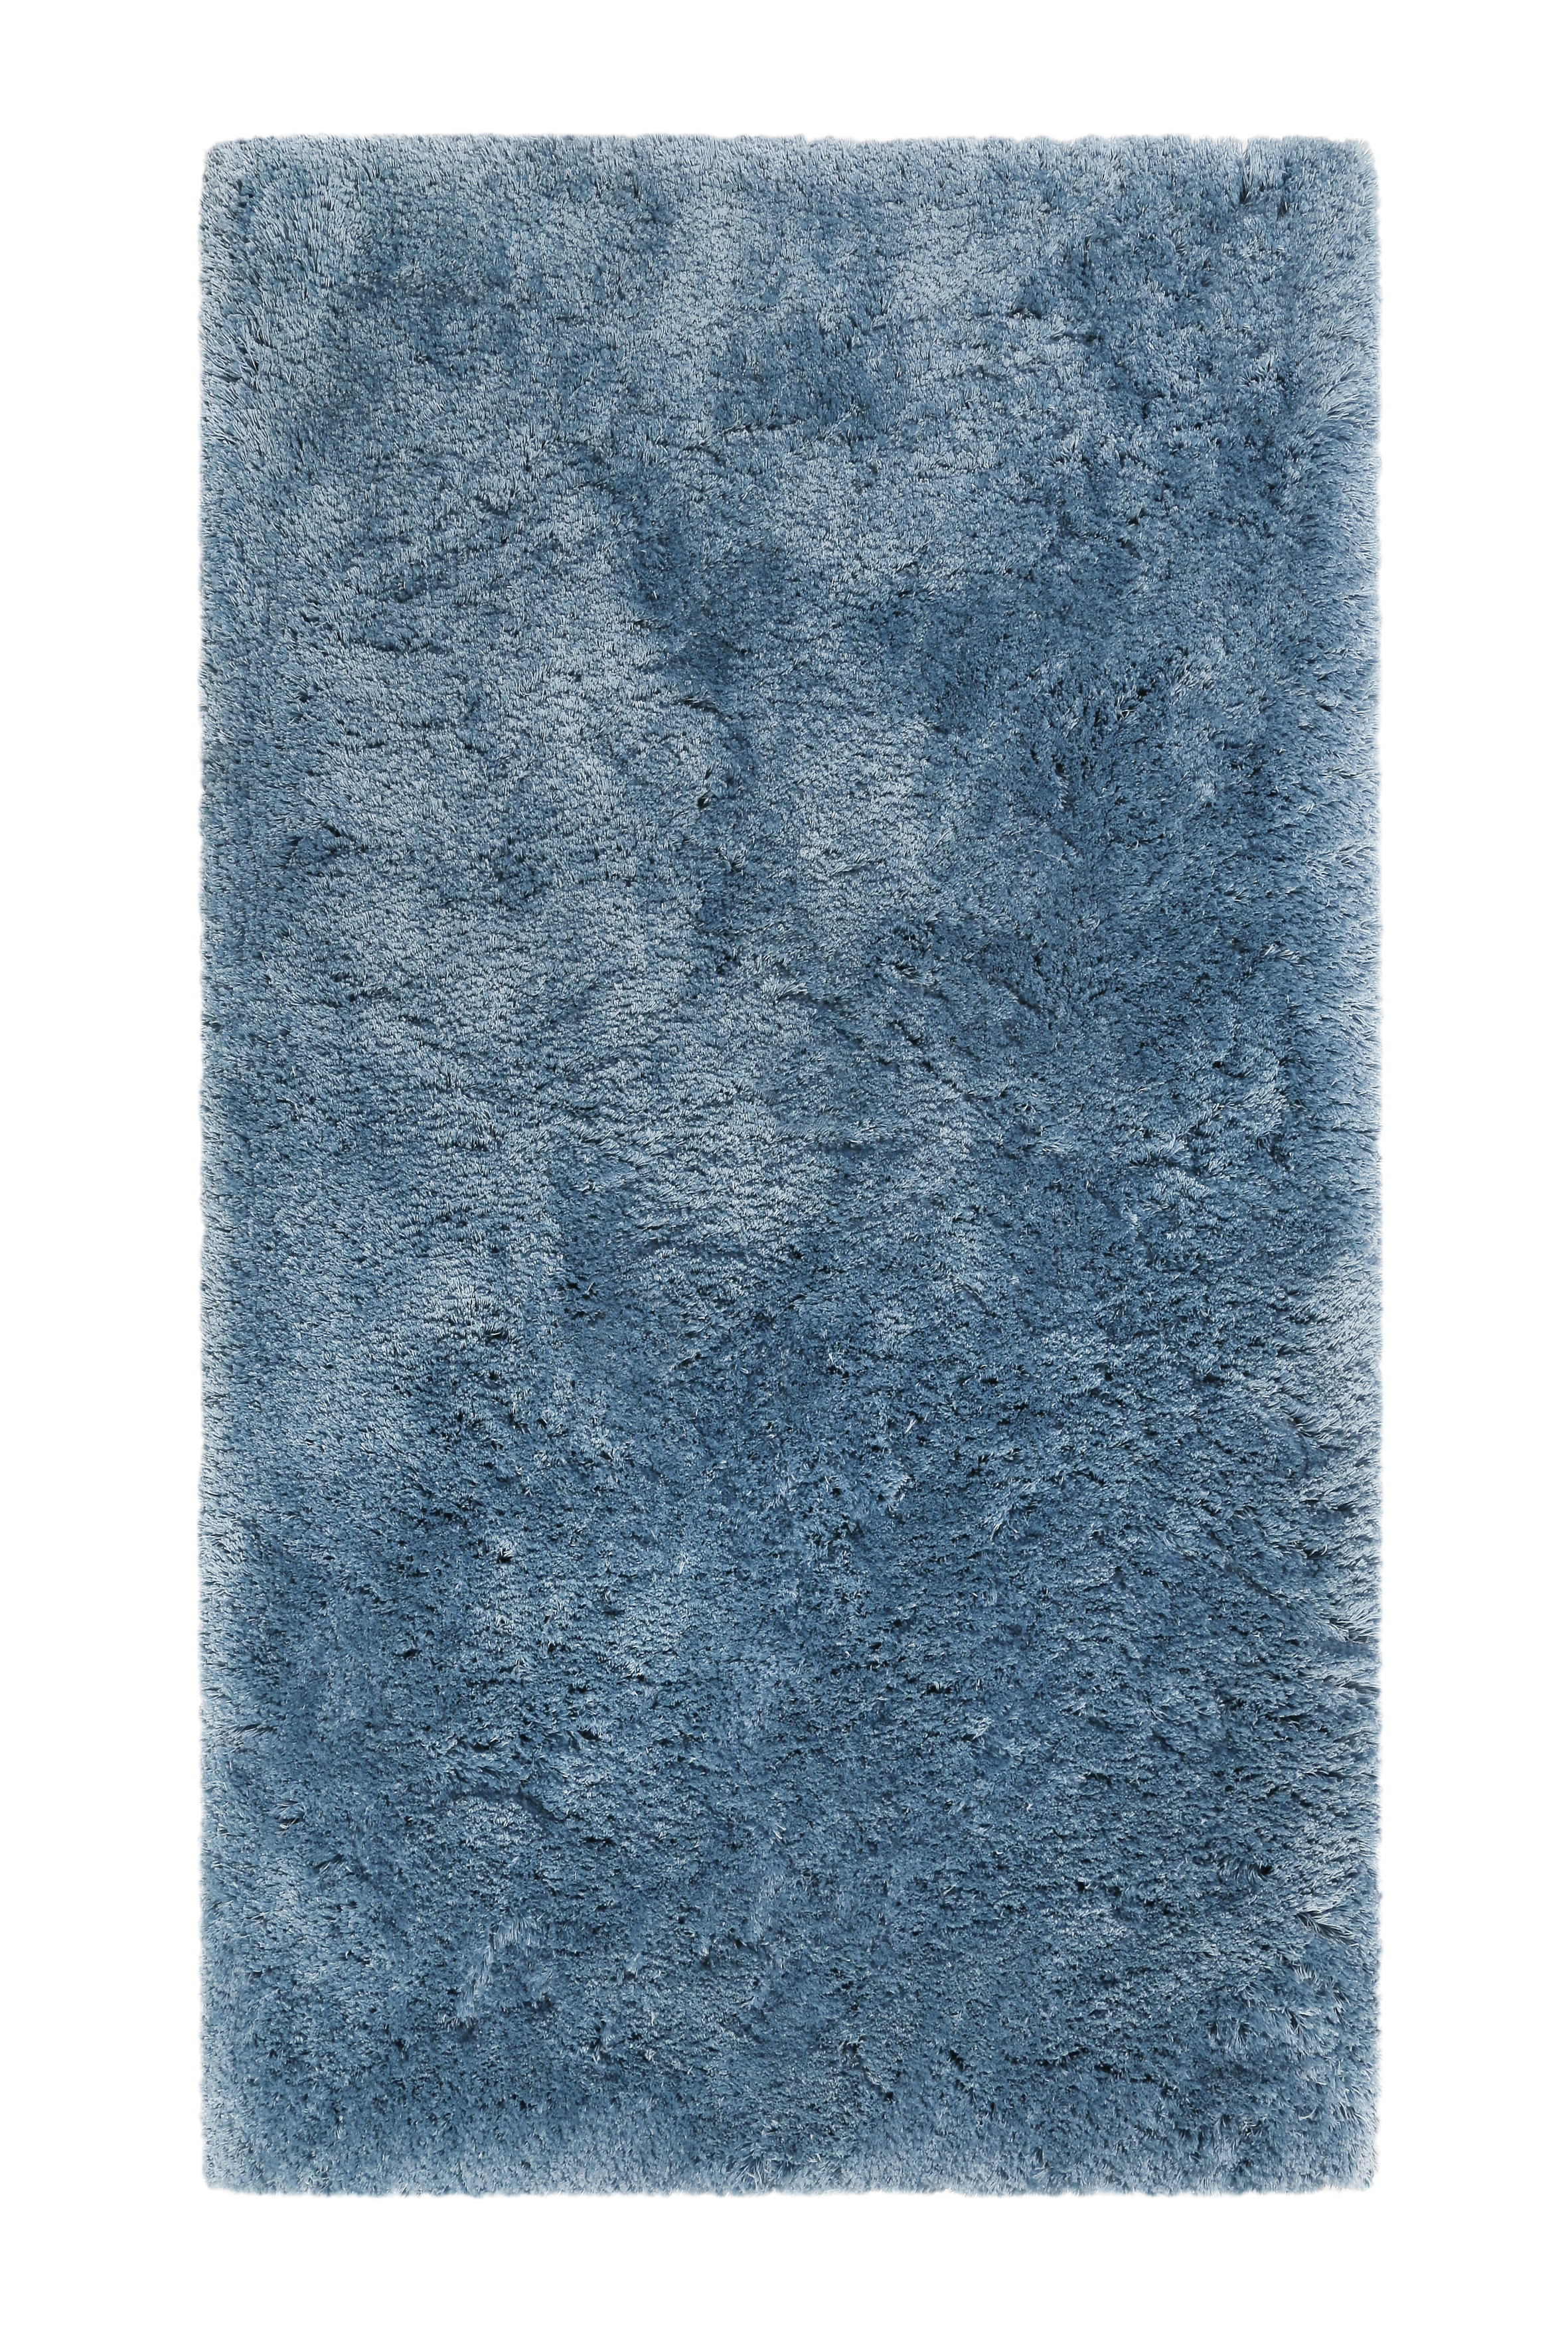 tapis de bain microfibre antidérapant bleu 55x65